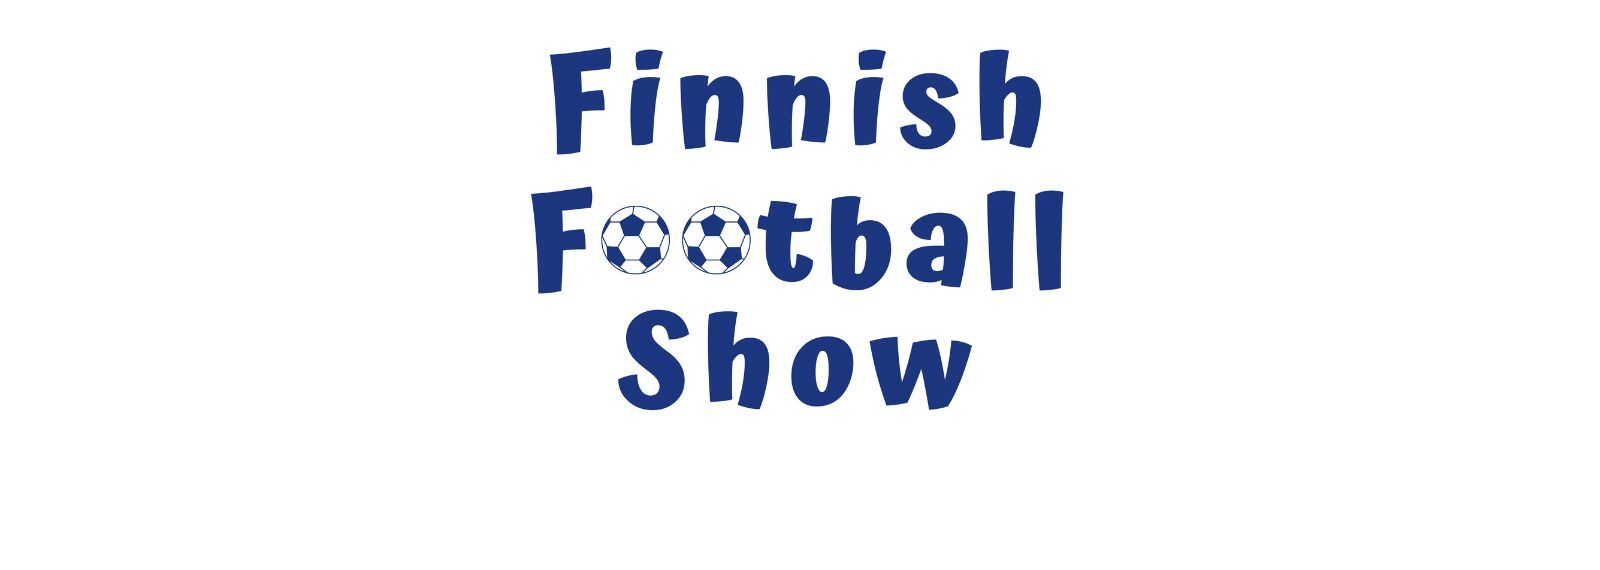 The Finnish Football Show